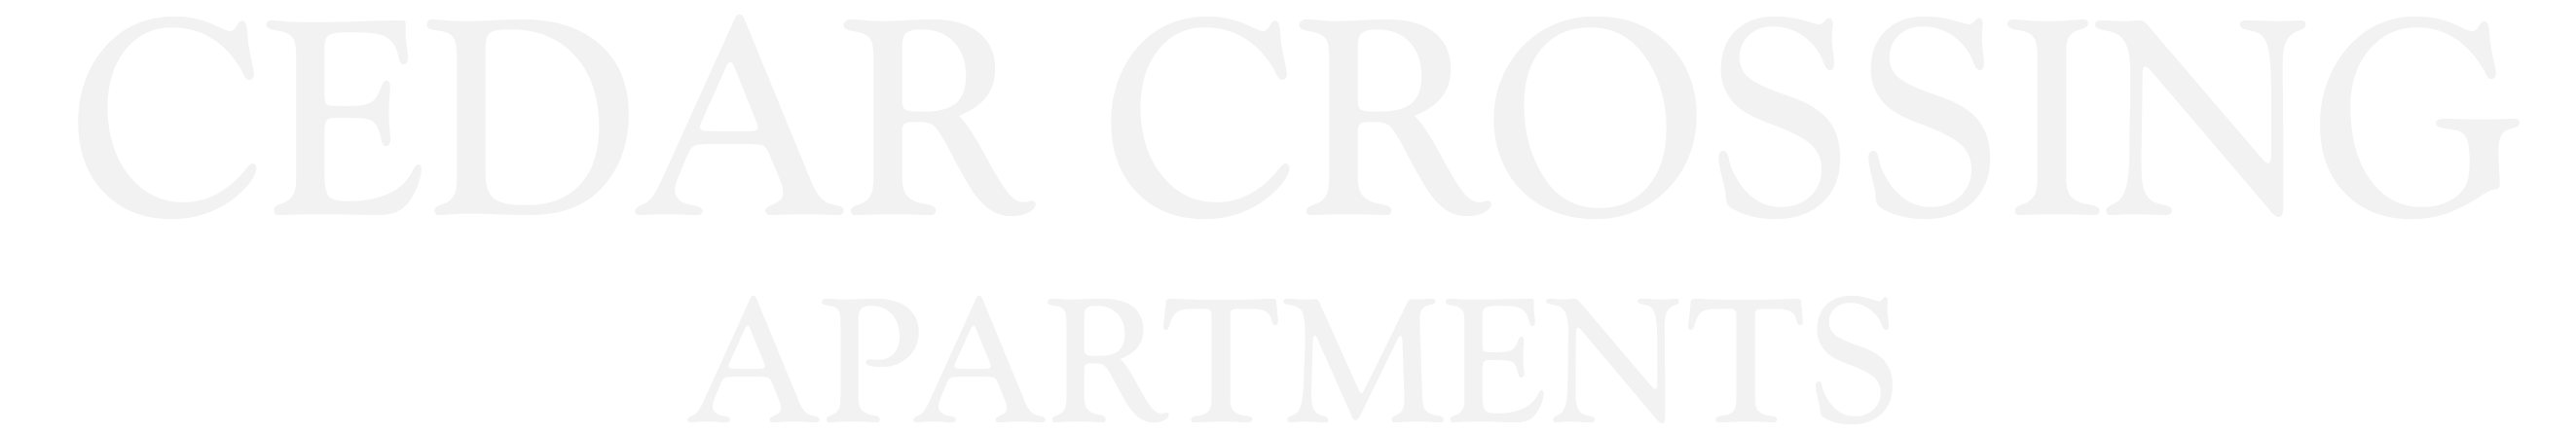 Cedar Crossing Apartments Logo